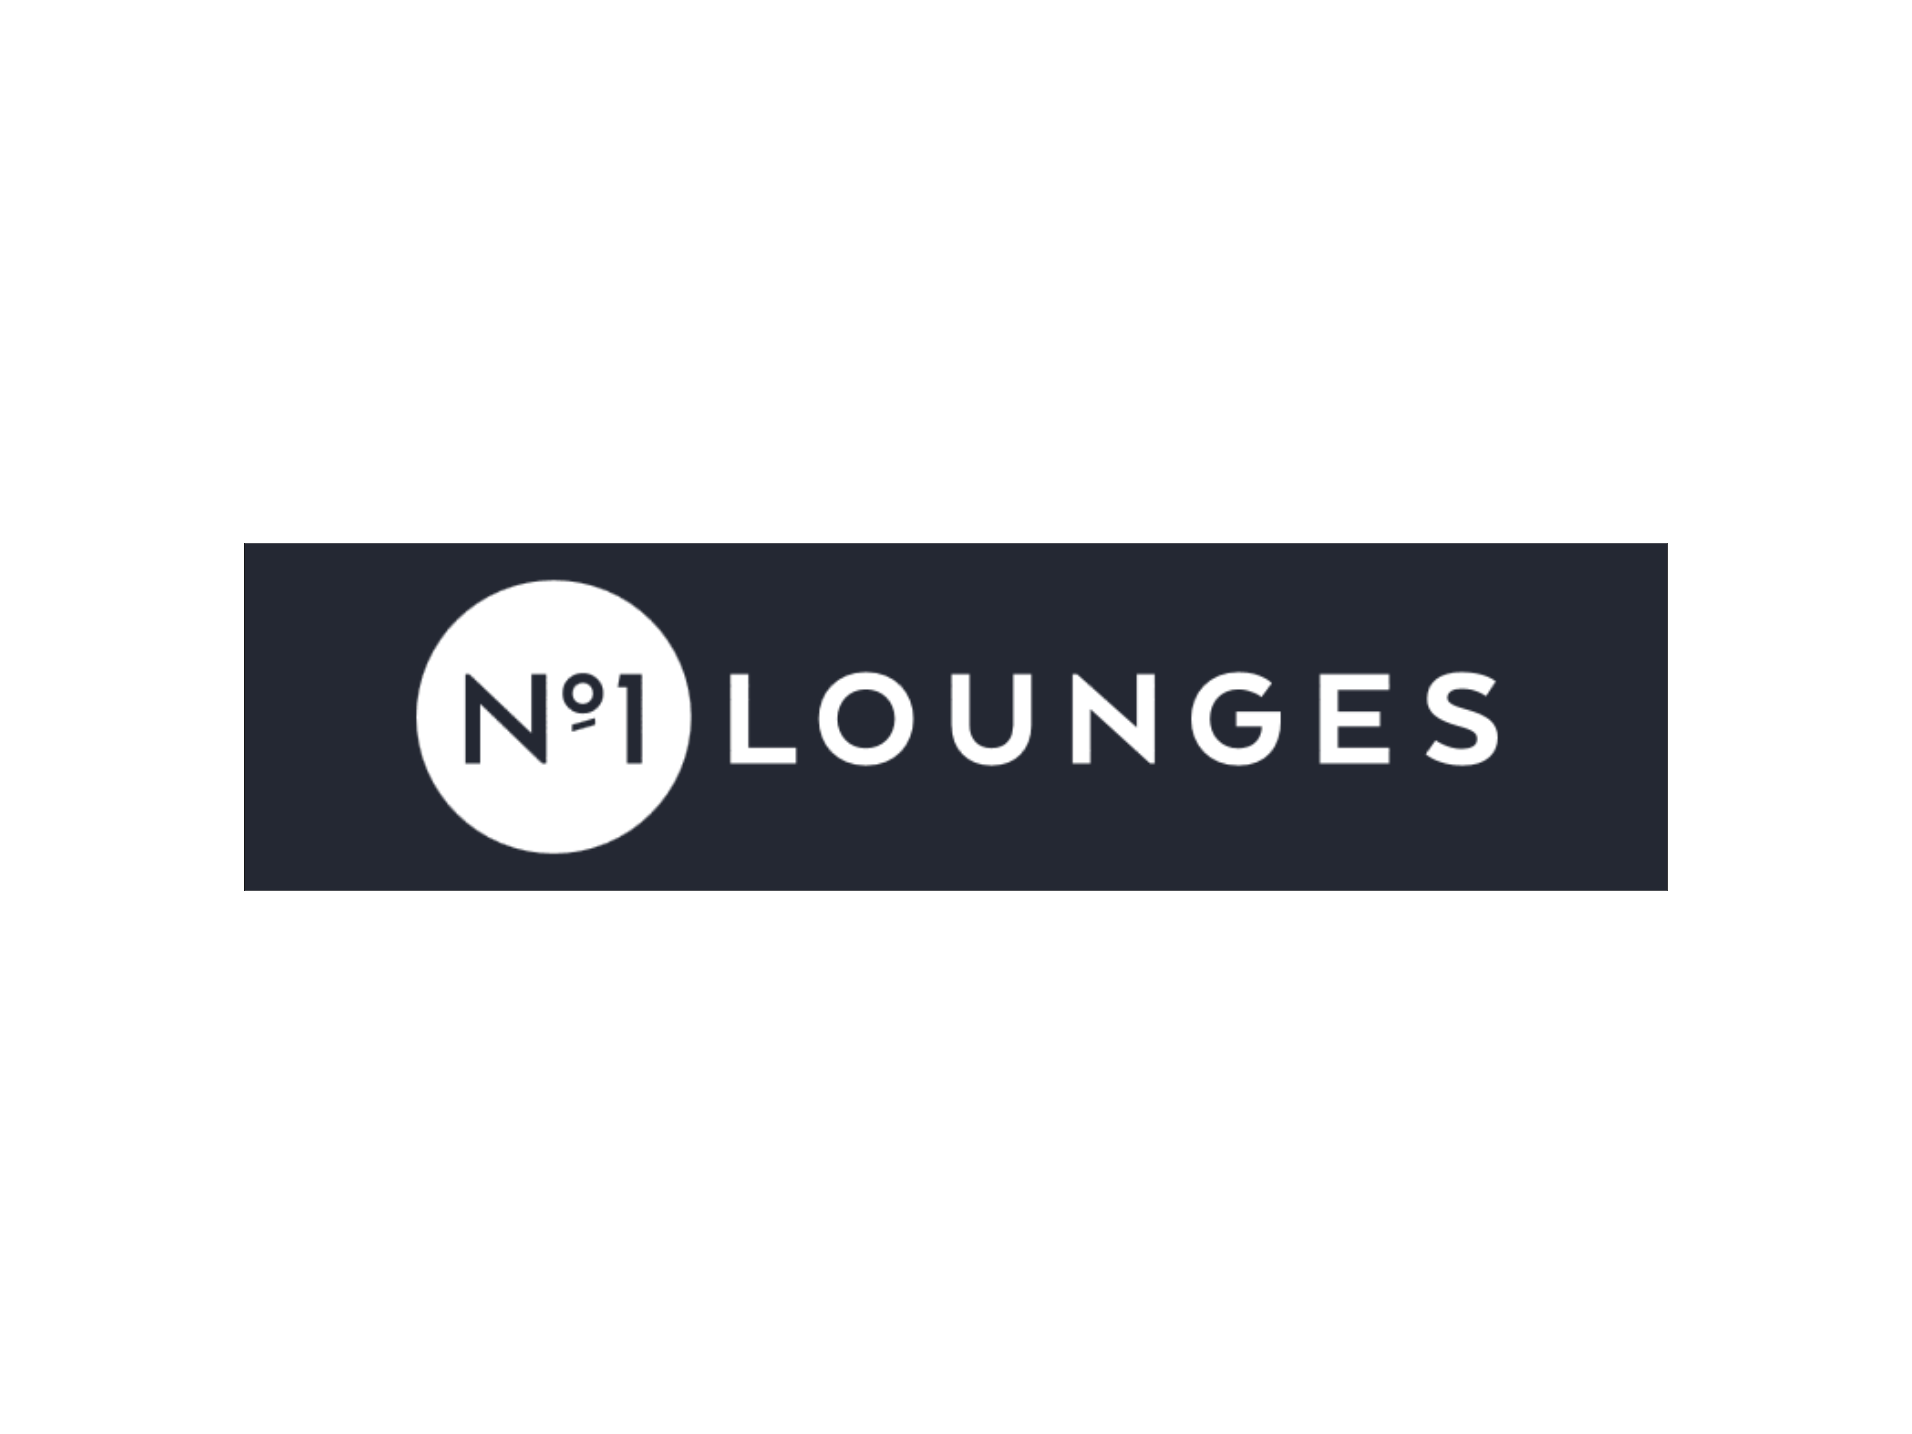 No1 lounges logo